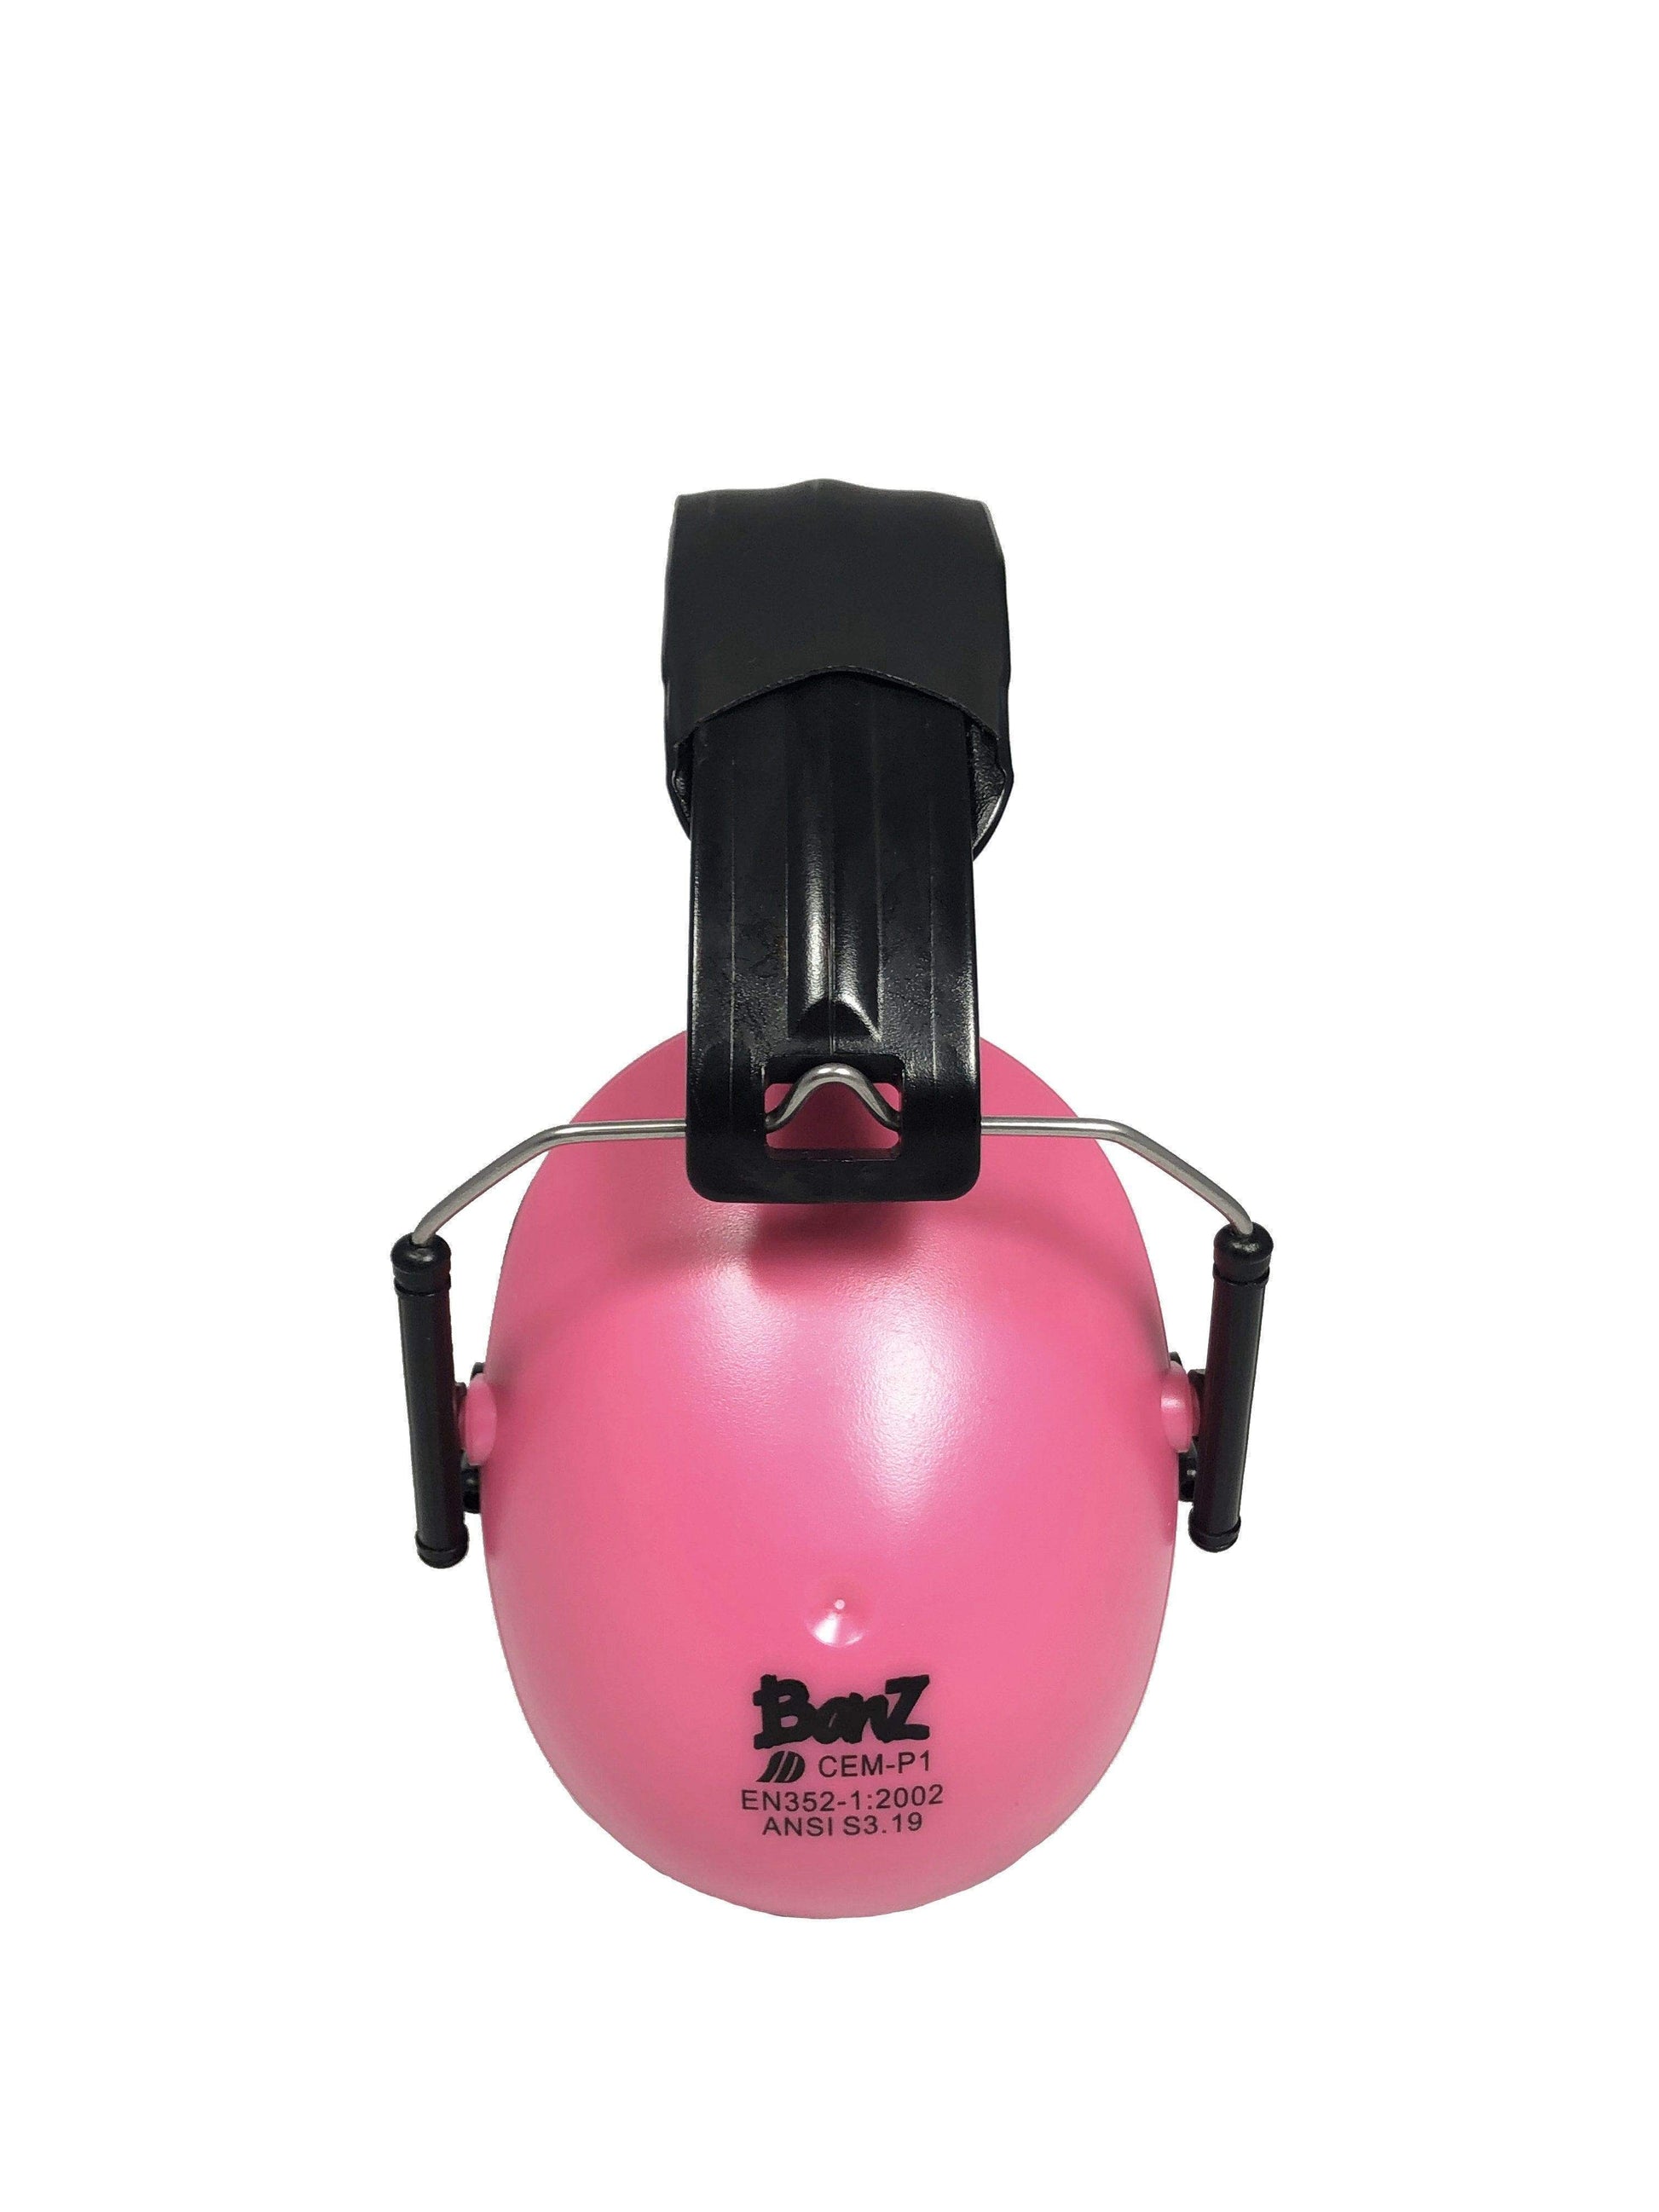 BANZ Hearing Protection Kids Earmuffs - Solids Petal Pink